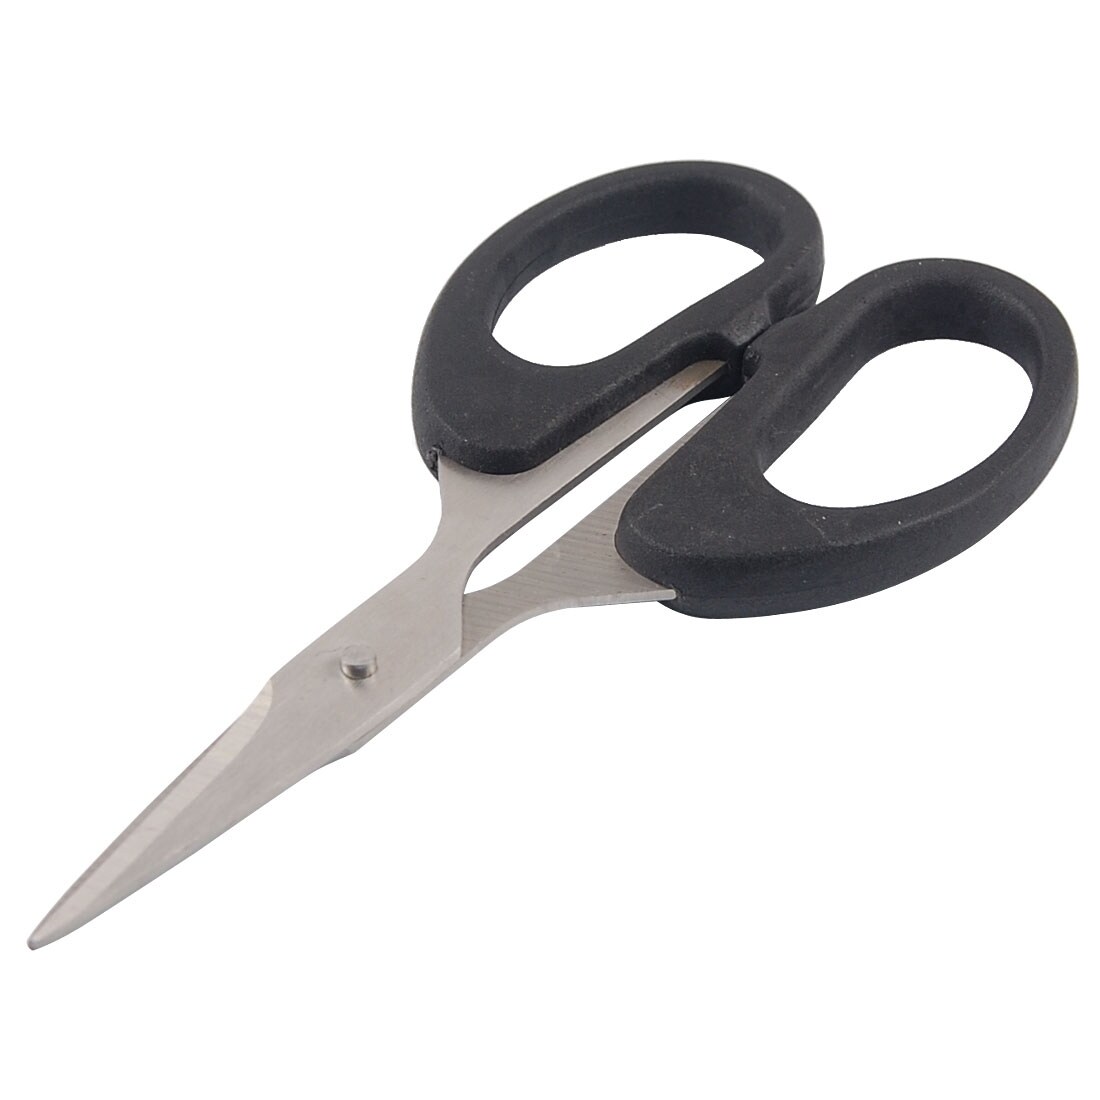 Plastic DIY Scrapbooking Paper Cutting Security Scissors Pink - Fuchsia -  Bed Bath & Beyond - 36854474